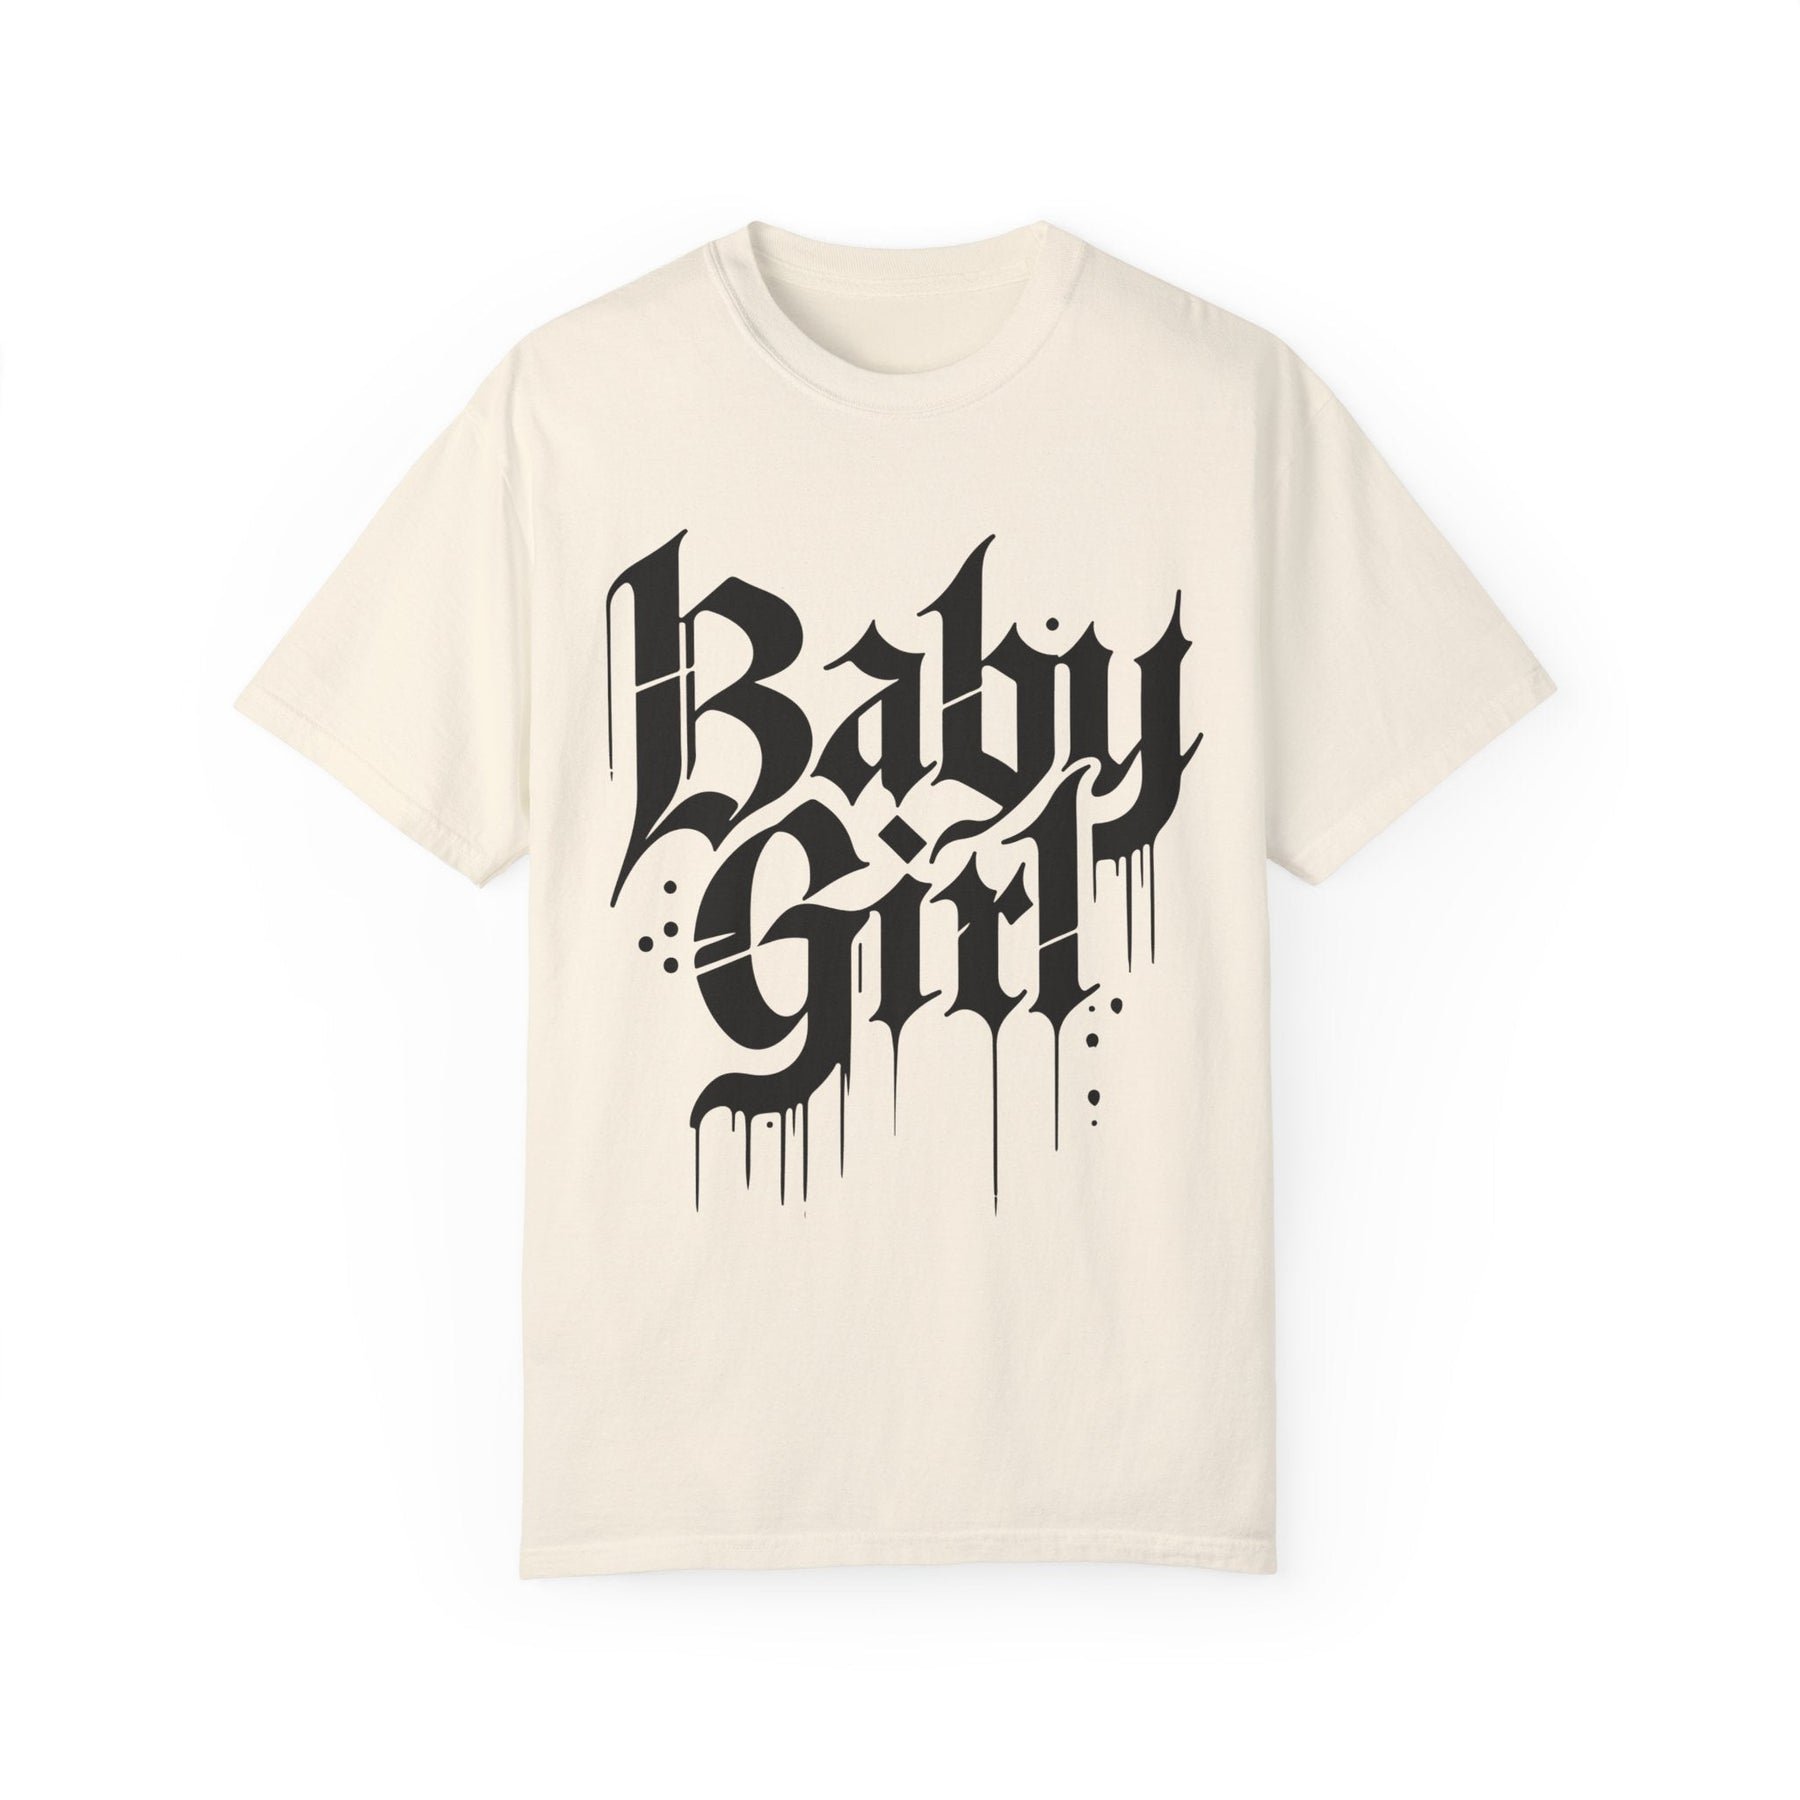 Baby Girl Comfort Tee - Goth Cloth Co.T - Shirt20676101406814468108